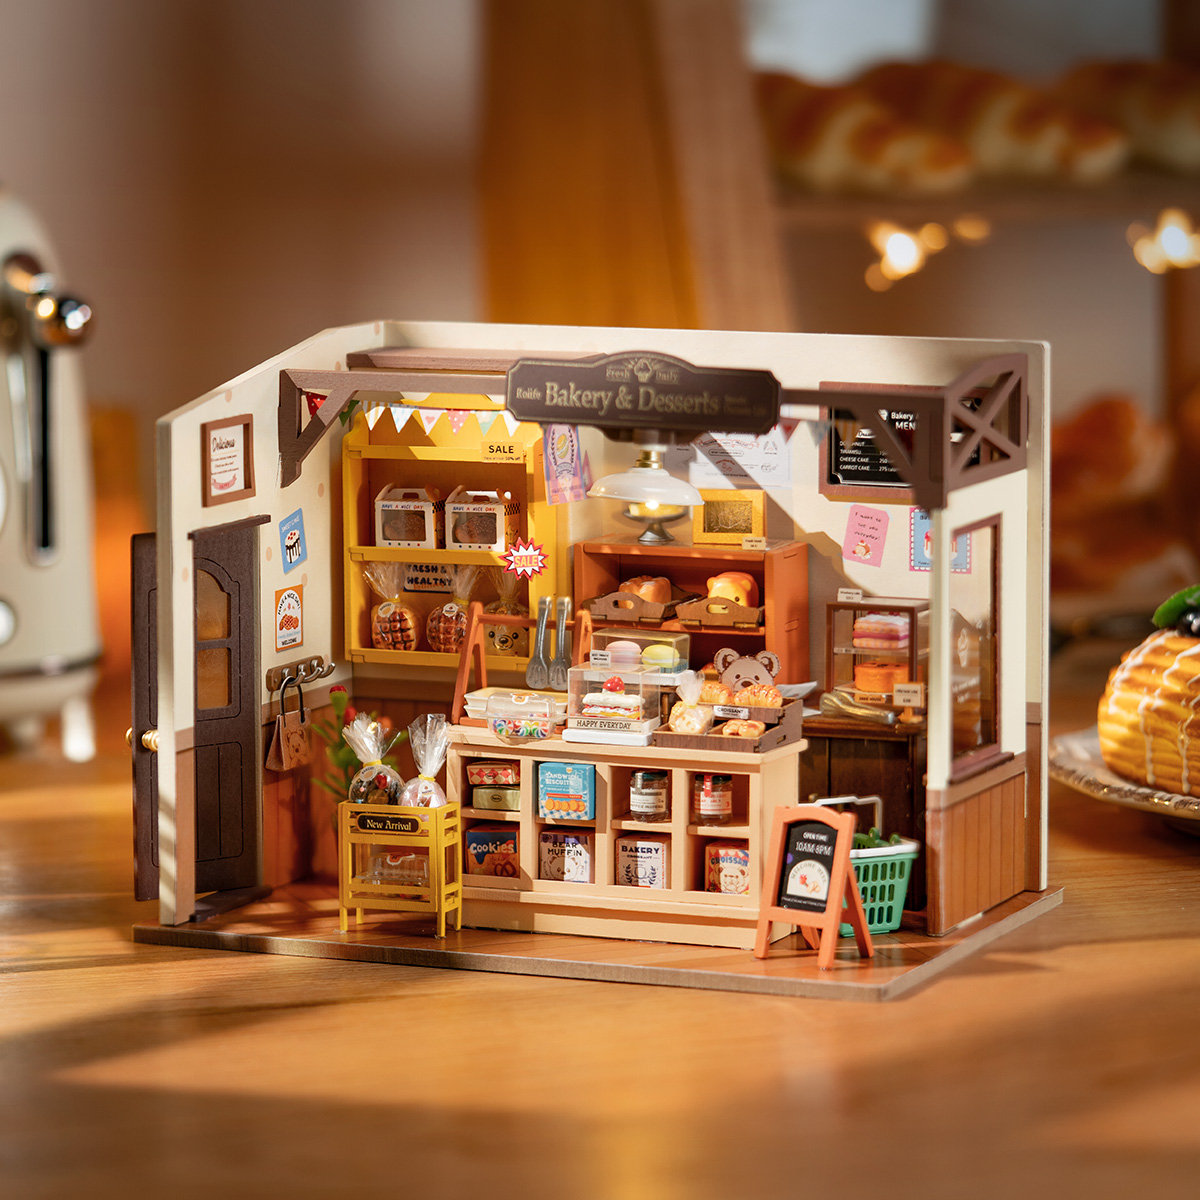 Rolife Borrowed Garden DIY Miniature House DS013 - Robotime Europe